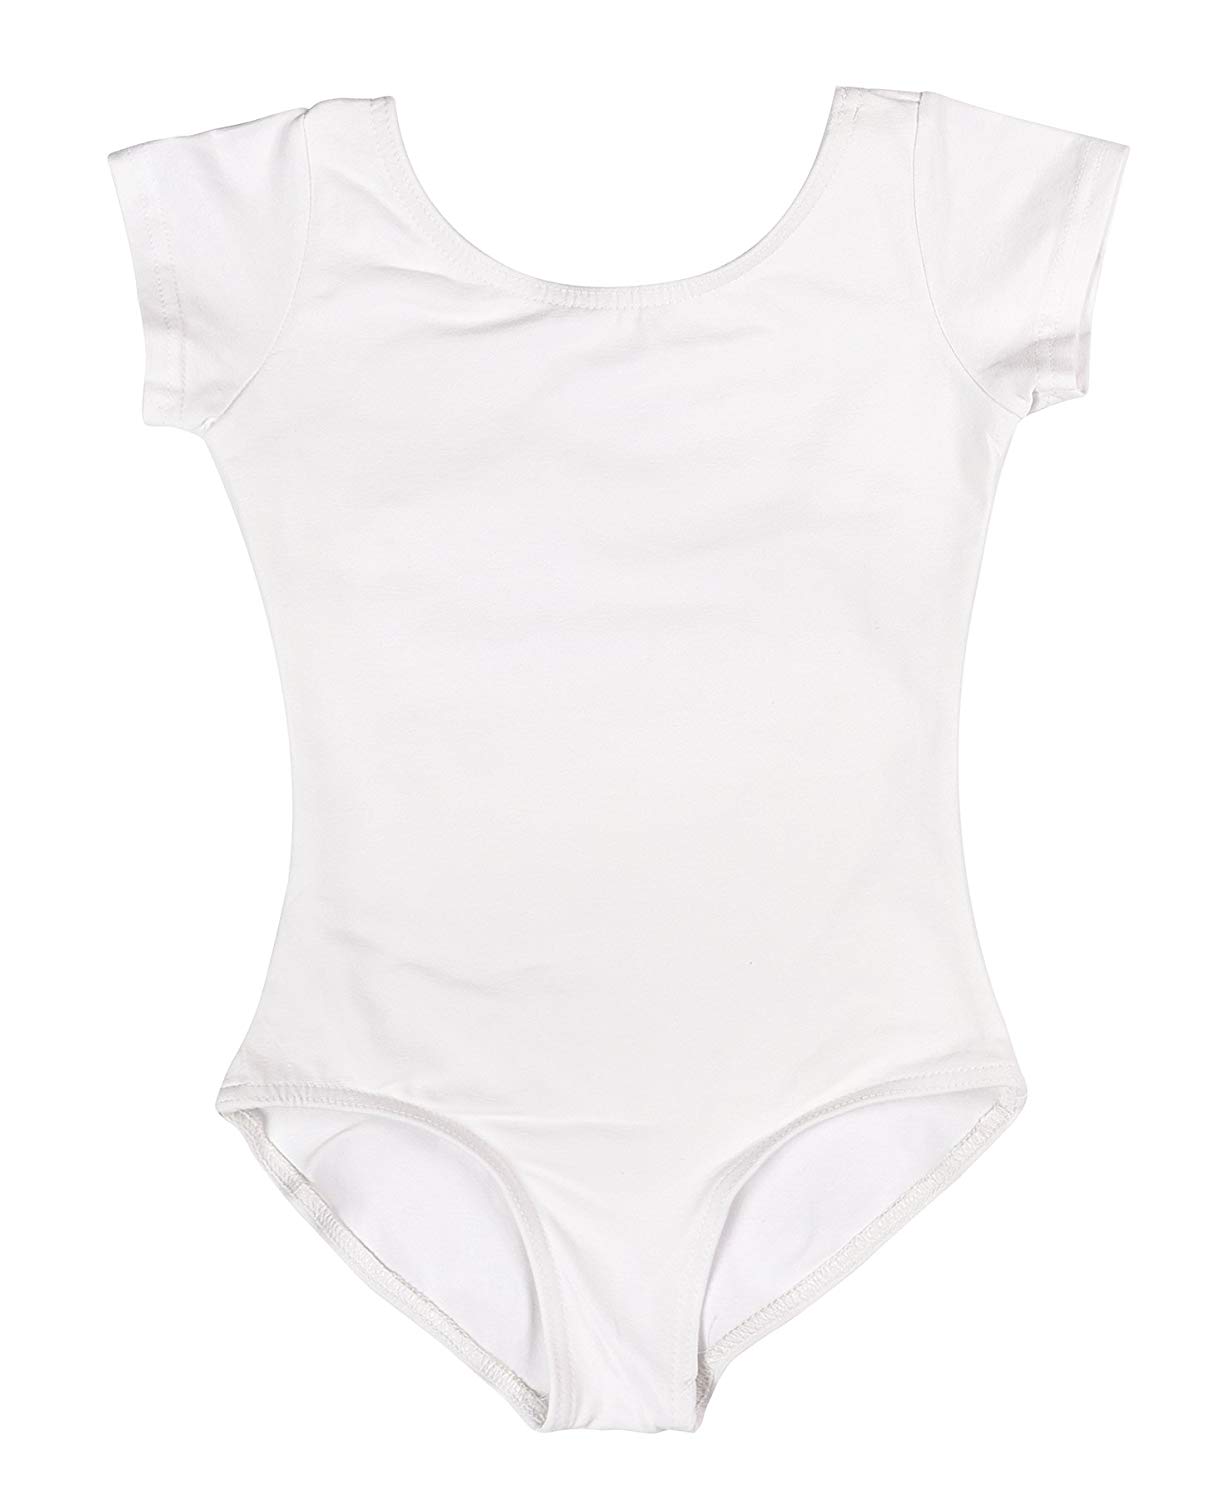 CAOMP Girl's Gymnastics Leotards, Short Sleeve Organic Cotton, White ...